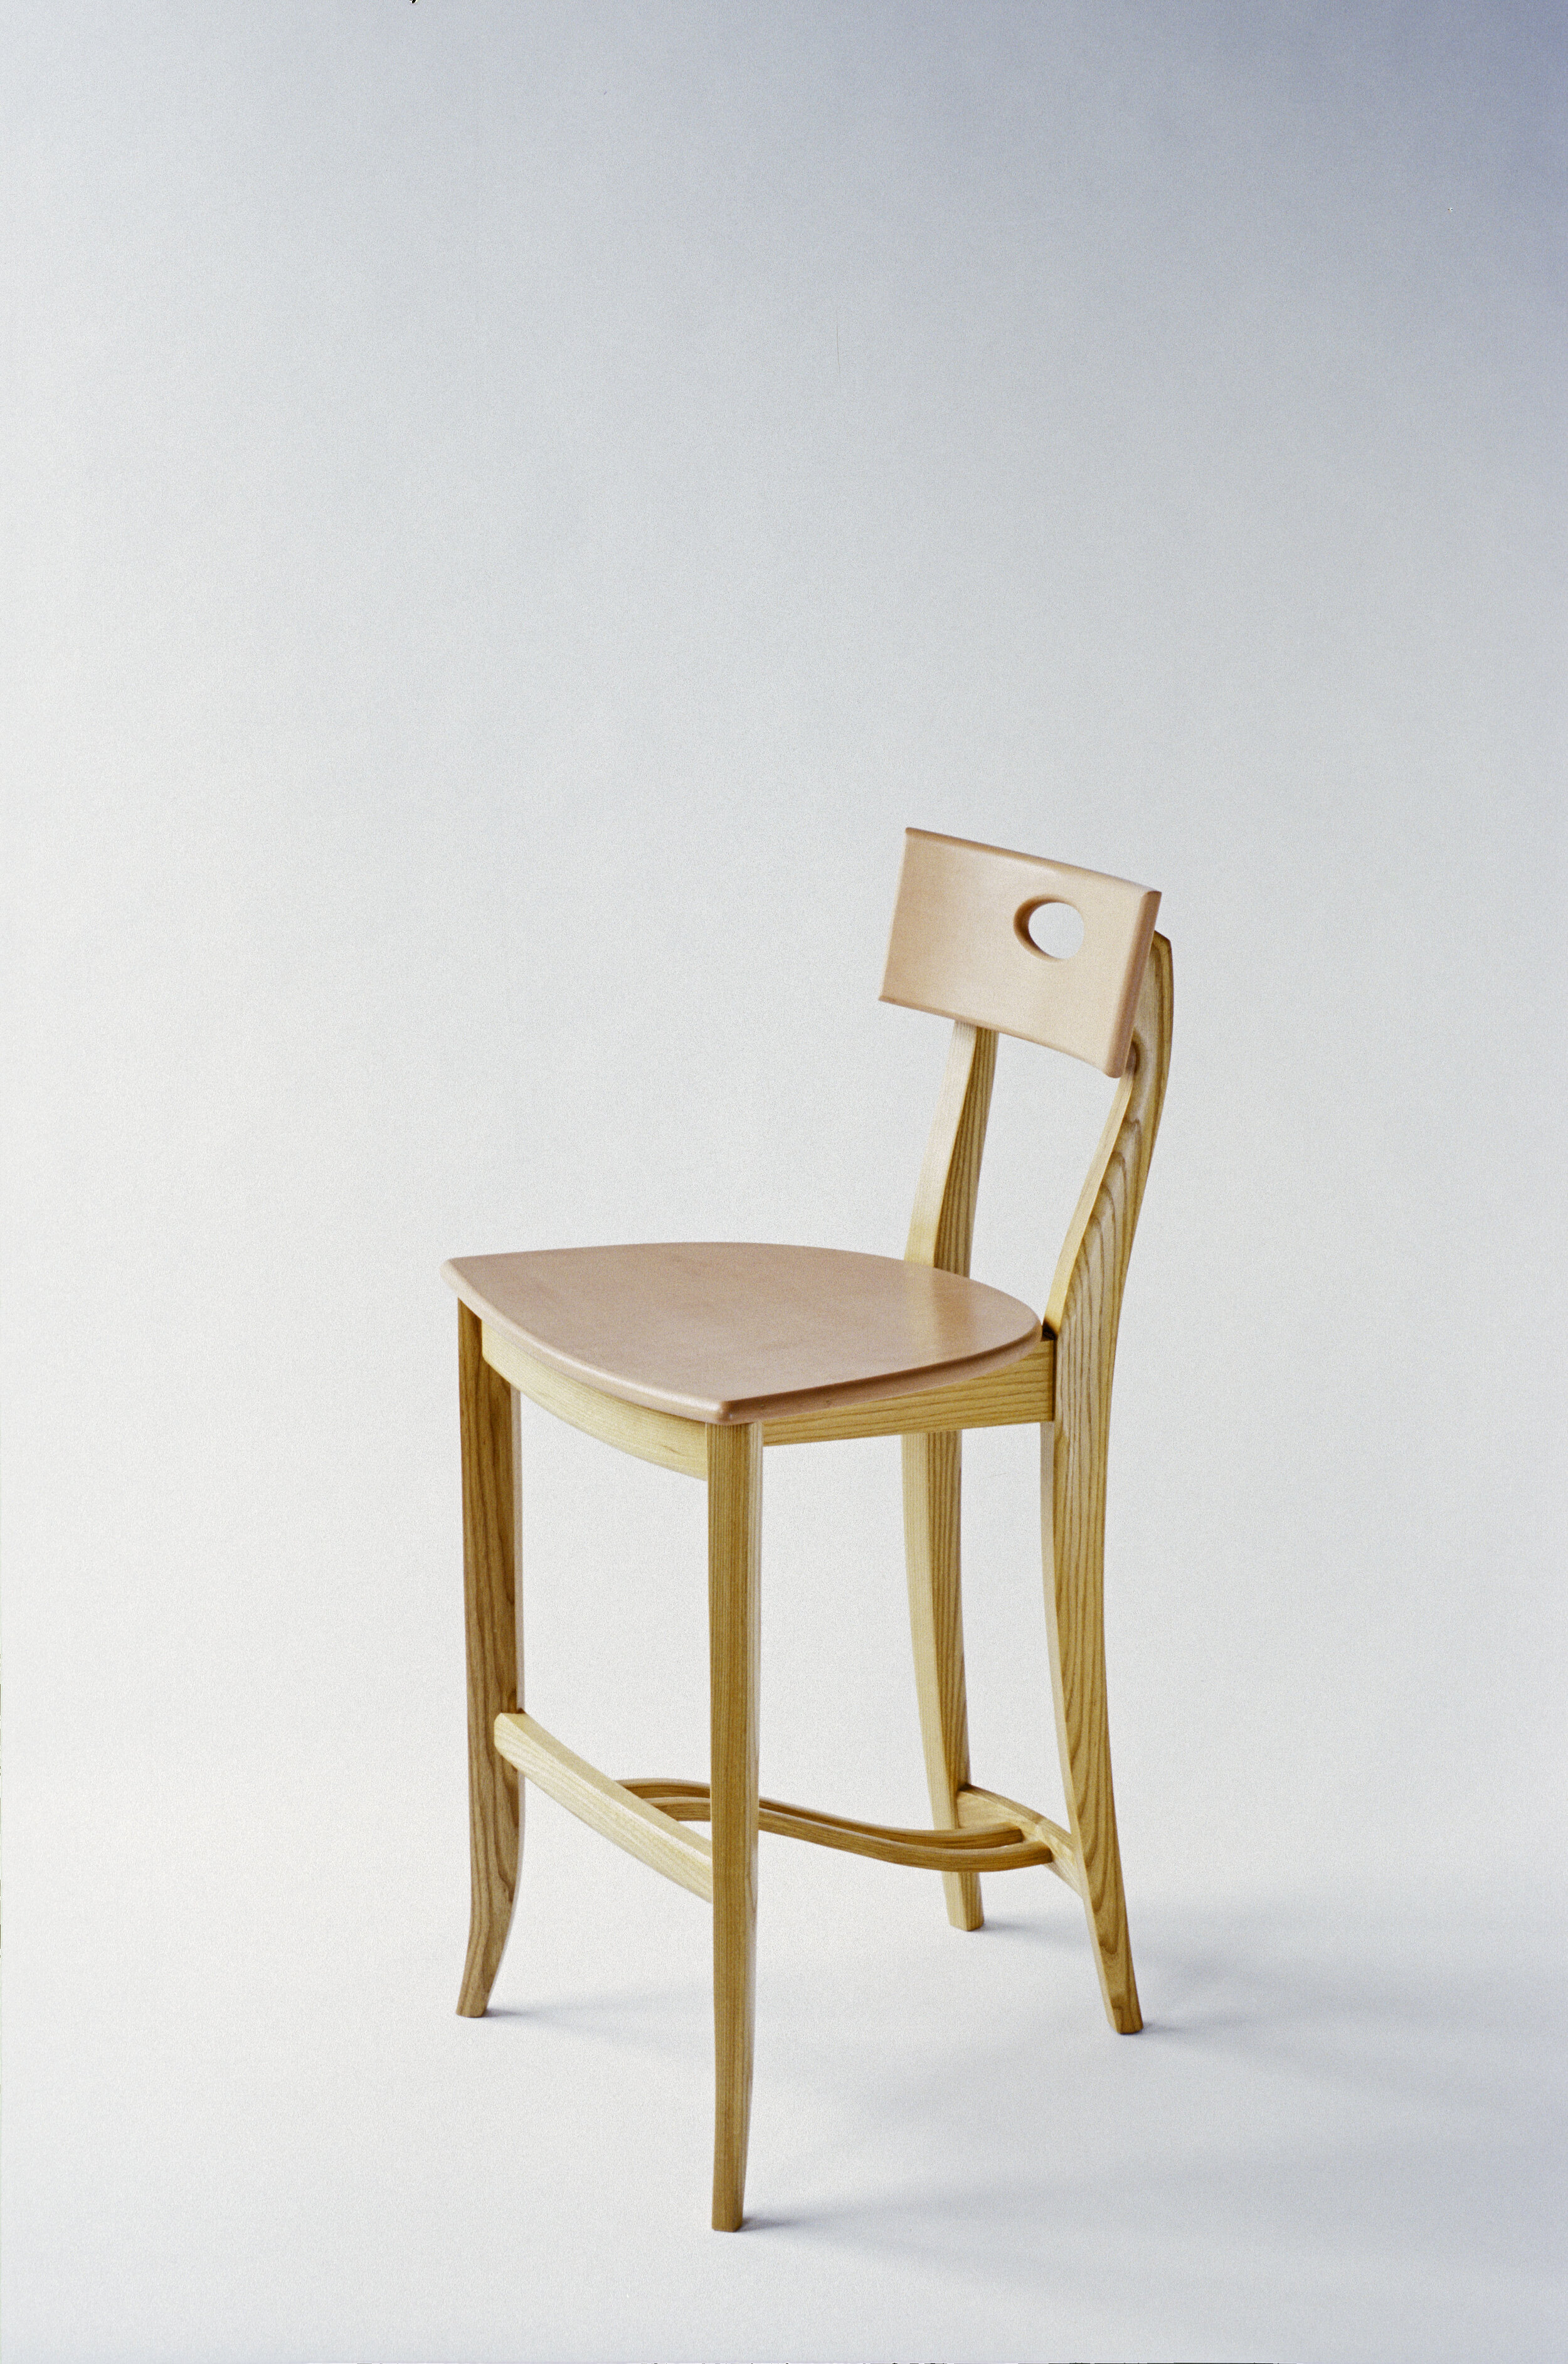 072 Cafe' stool 2000.jpg